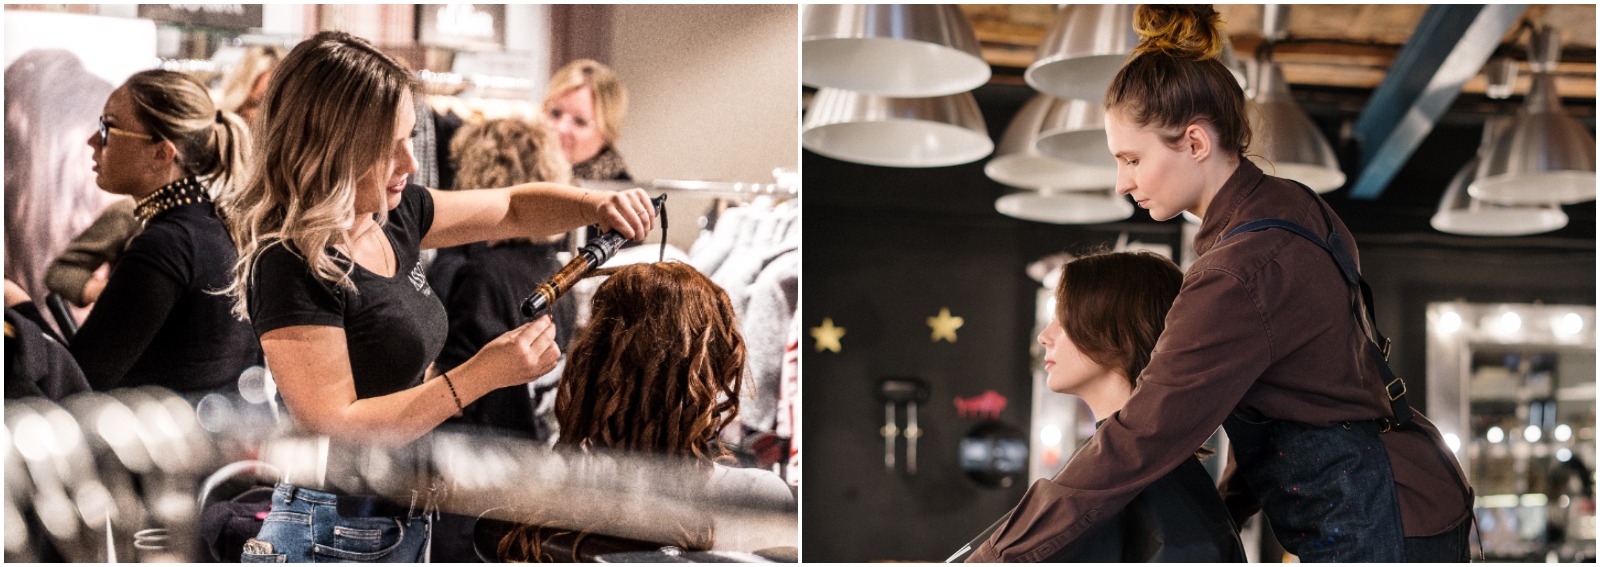 parrucchieri instagram italiani hairstylist internazionali cover dekstop